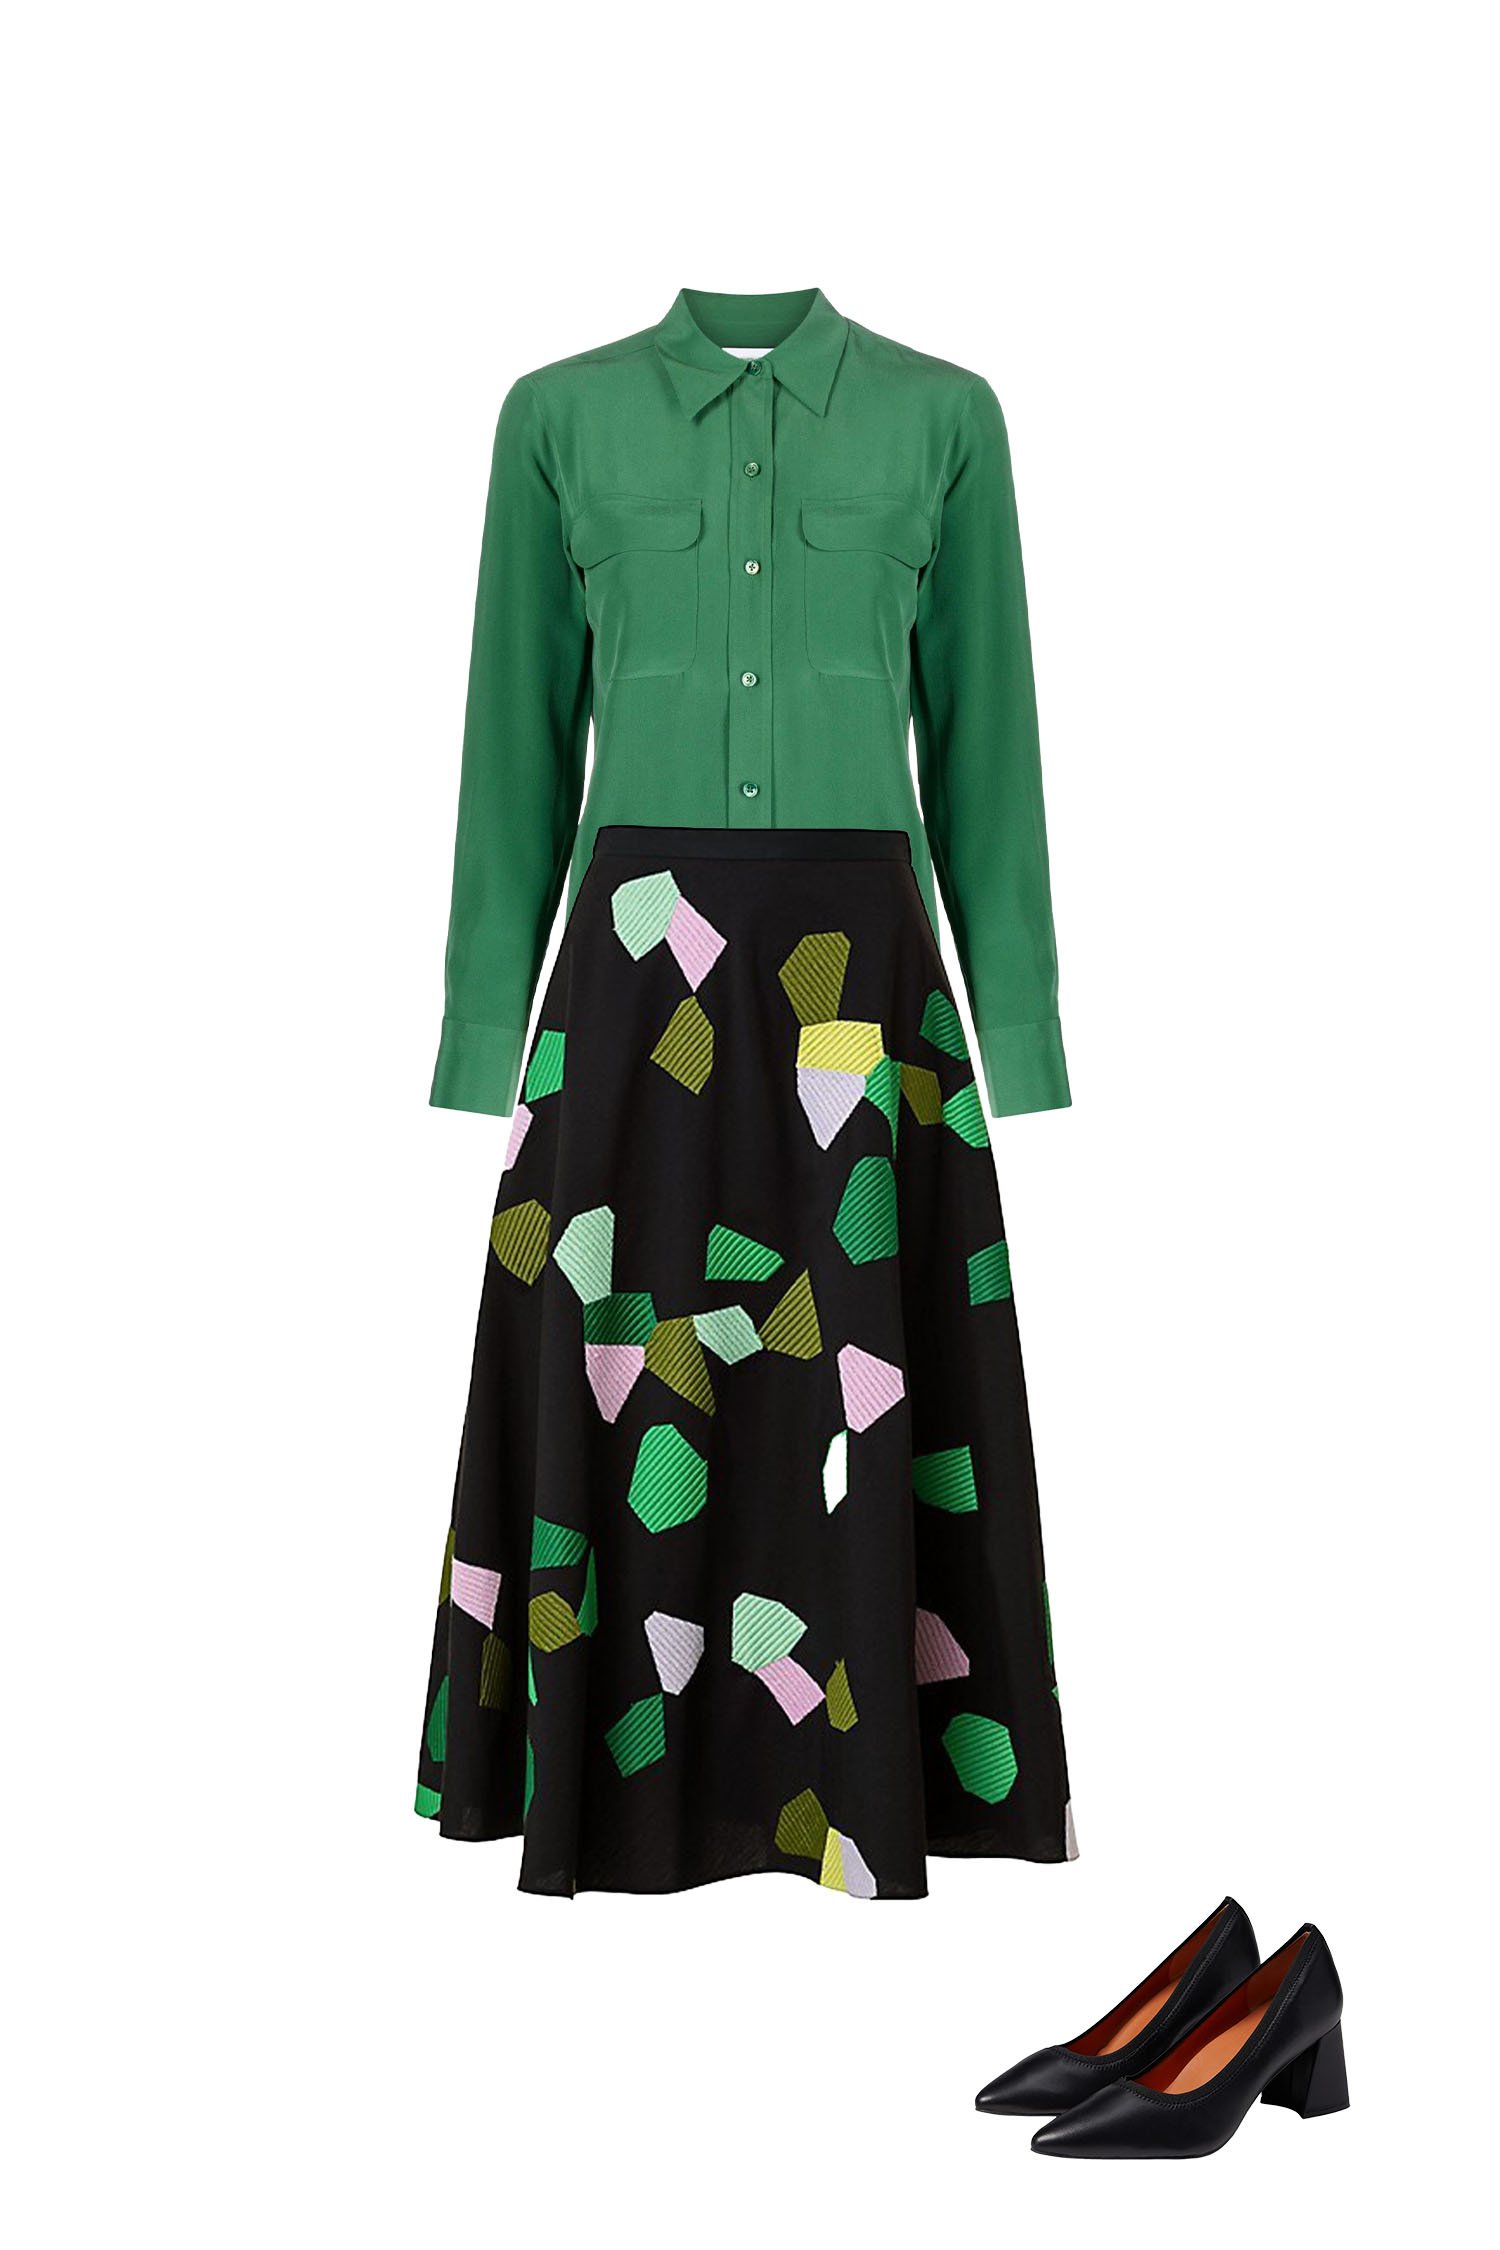 Business Casual Midi-Skirt Outfit - Black Multicolor Print Midi Skirt, Green Silk Shirt, Black Pumps